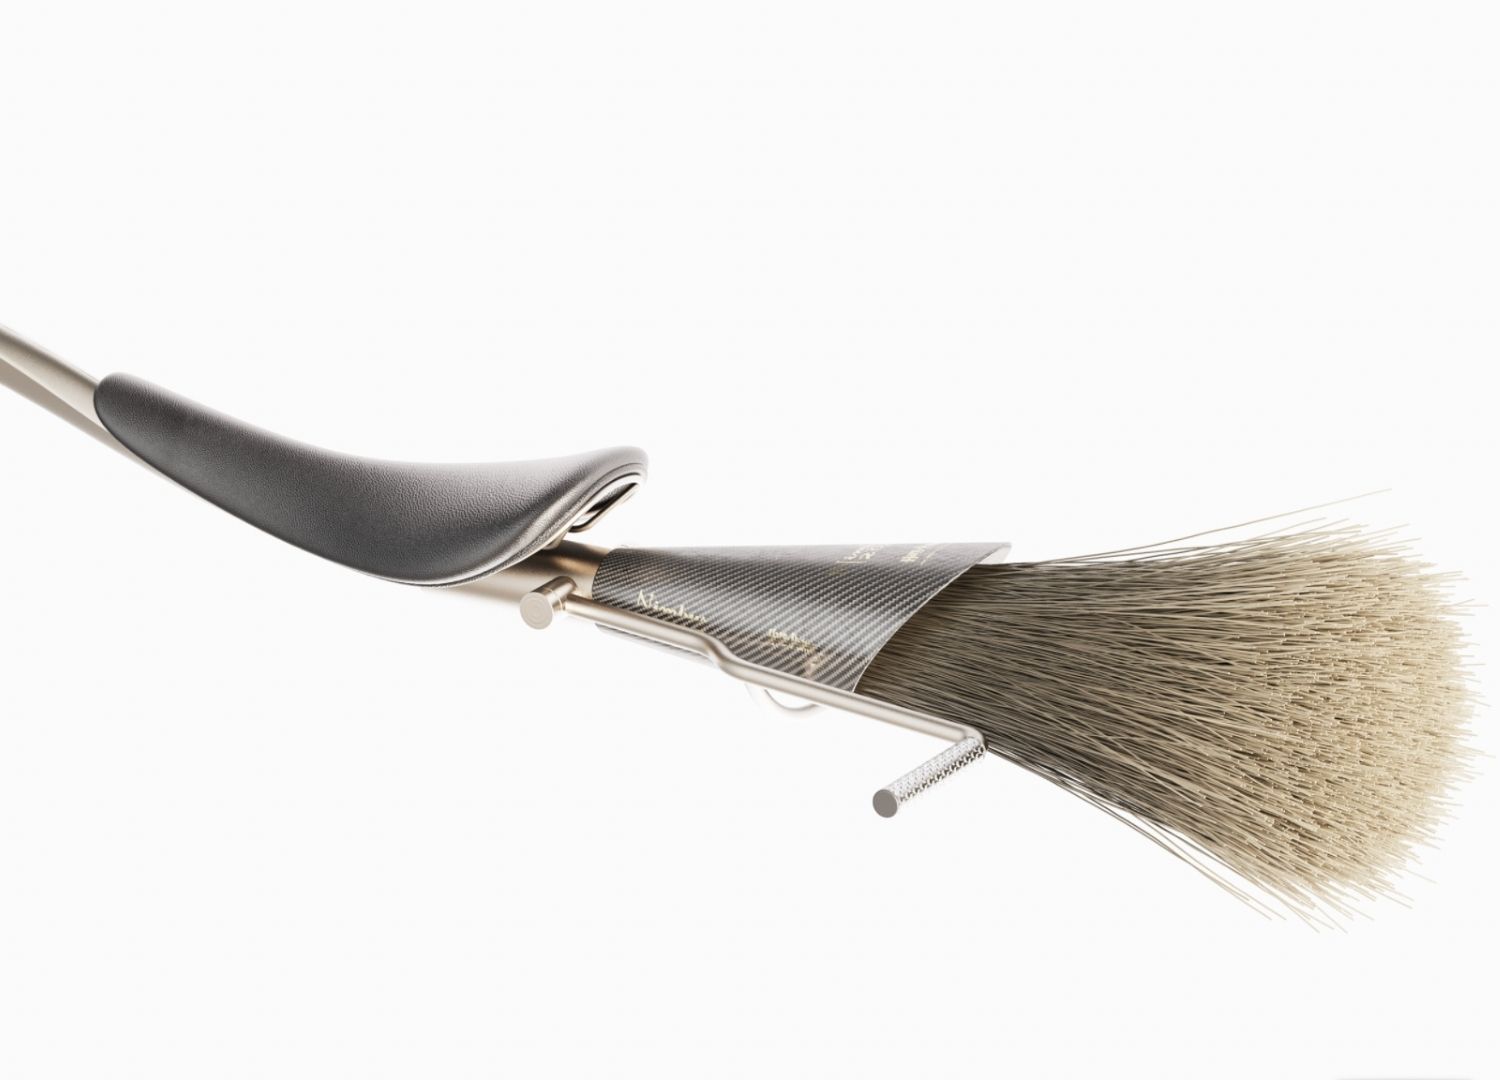 Man creates epic full-size Harry Potter Nimbus 2000 broom for